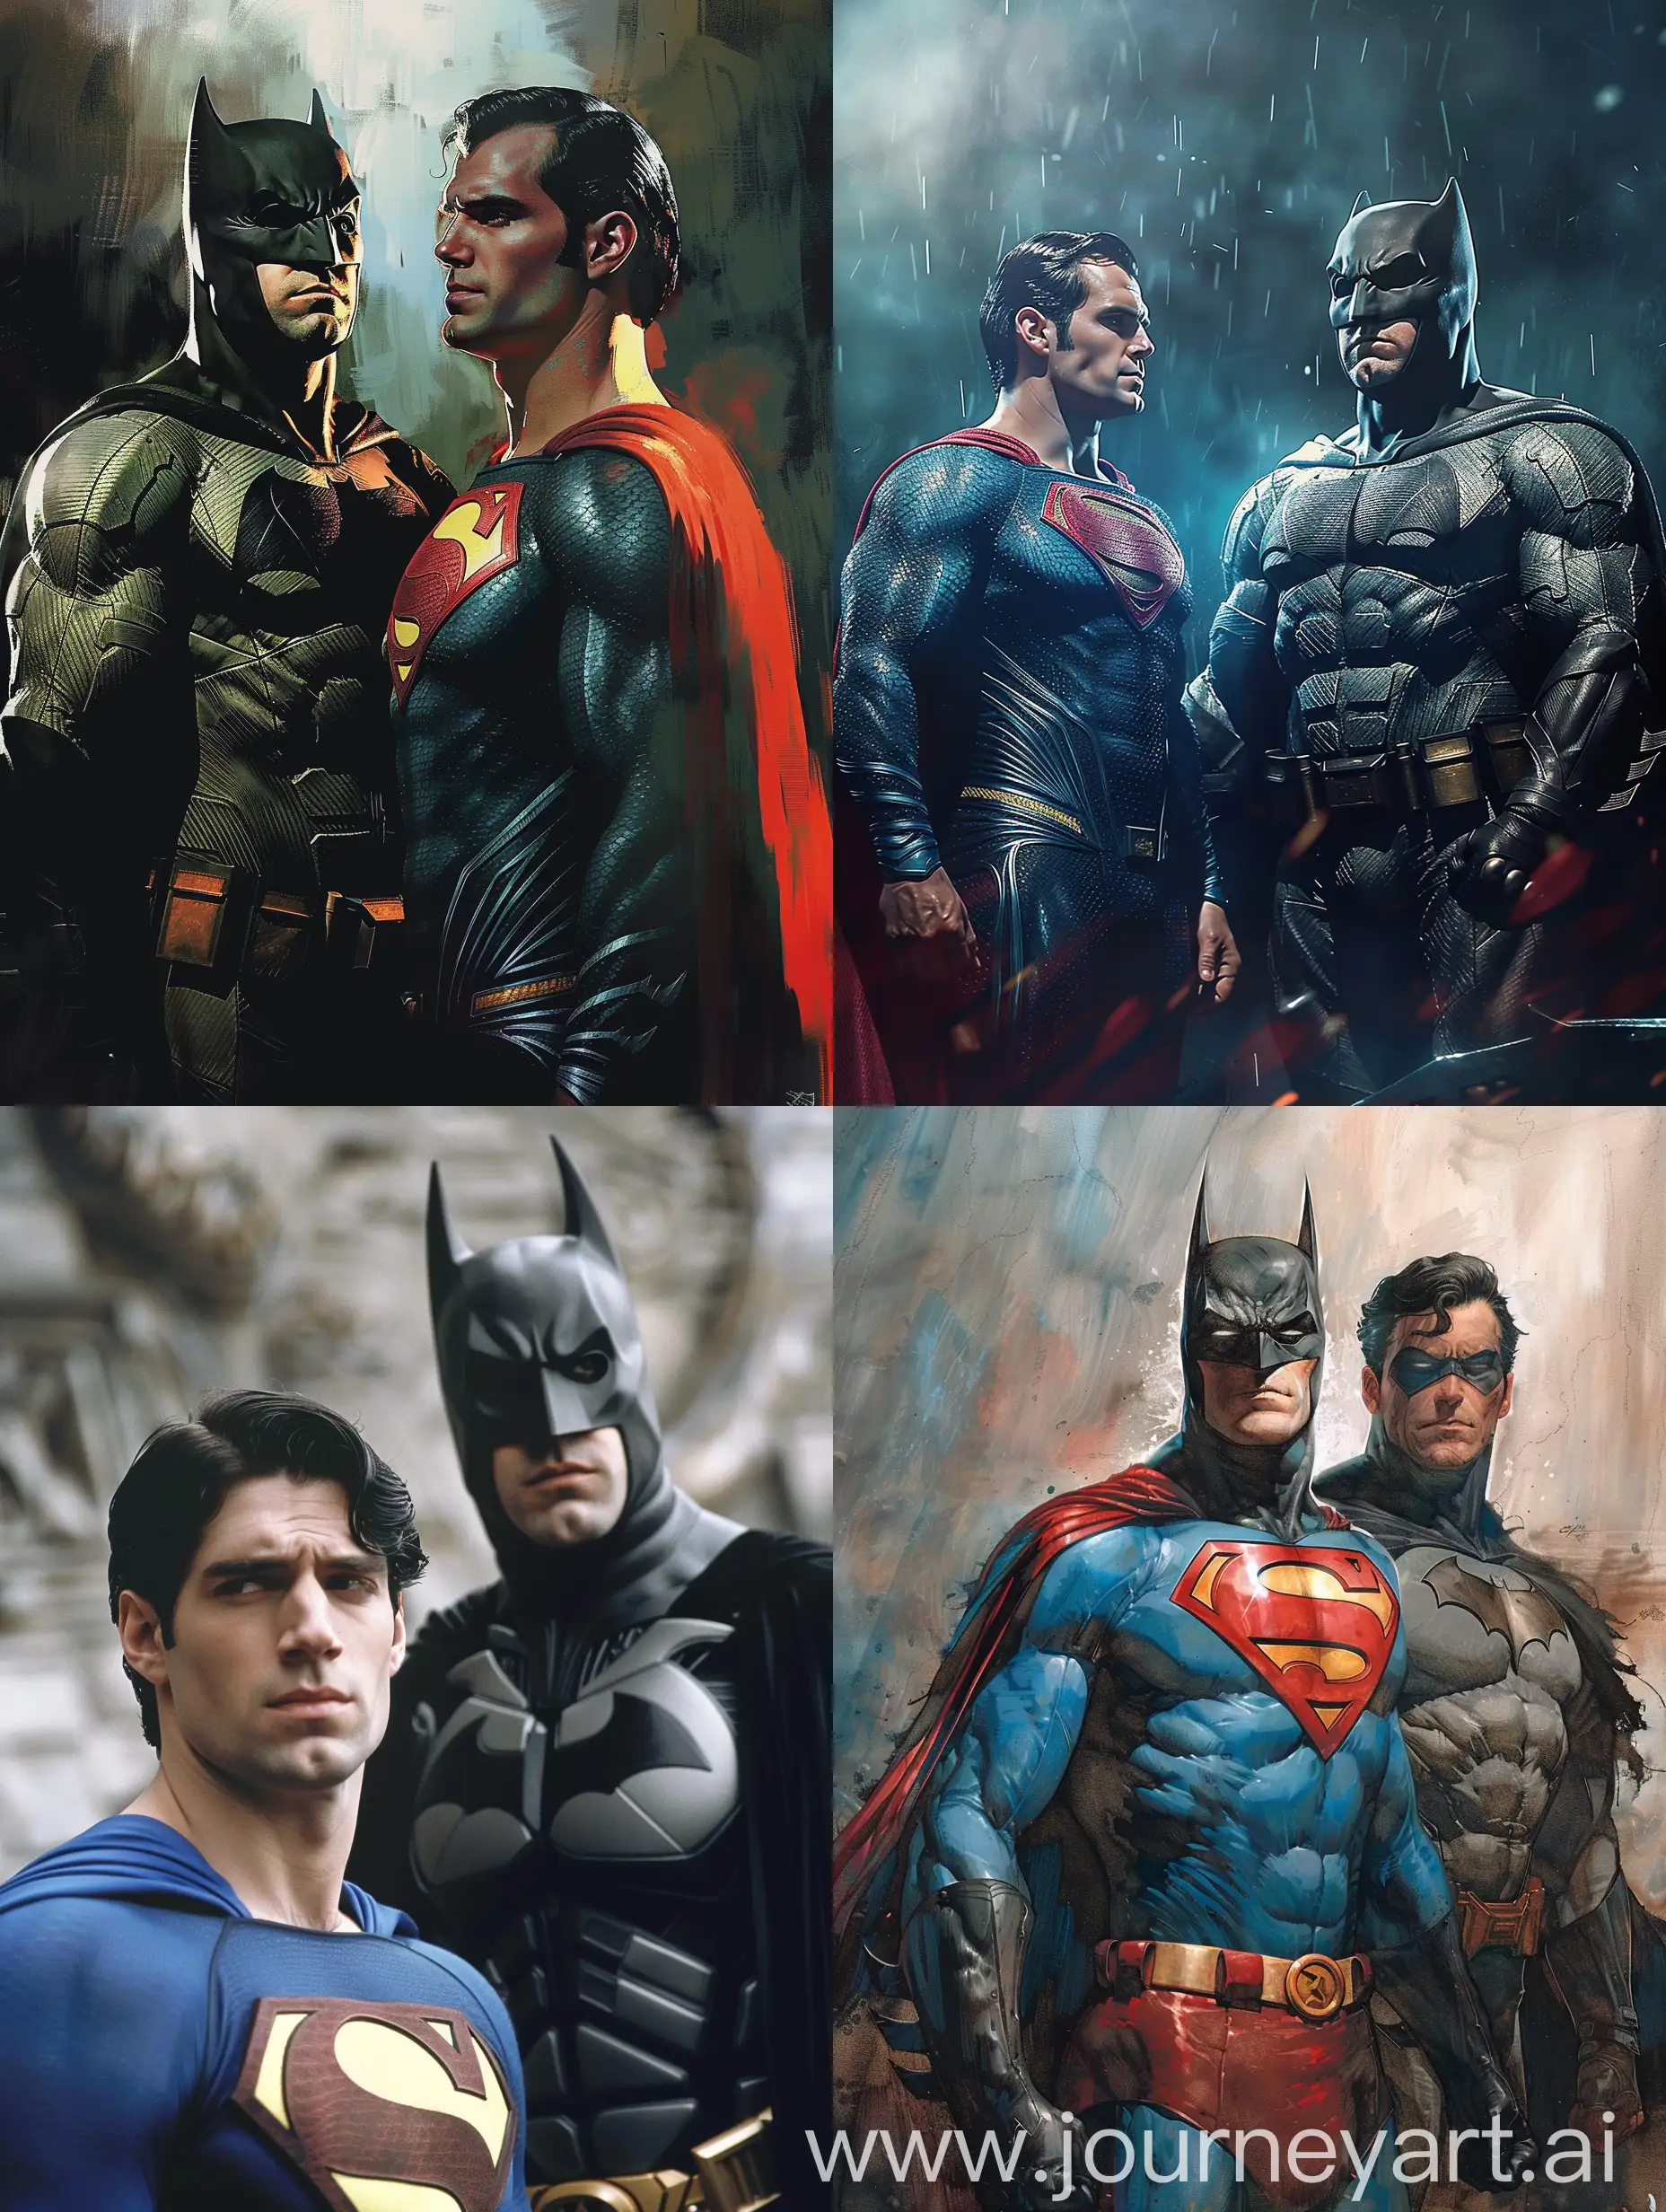 Epic-Showdown-Batman-Versus-Superman-in-HighStakes-Battle